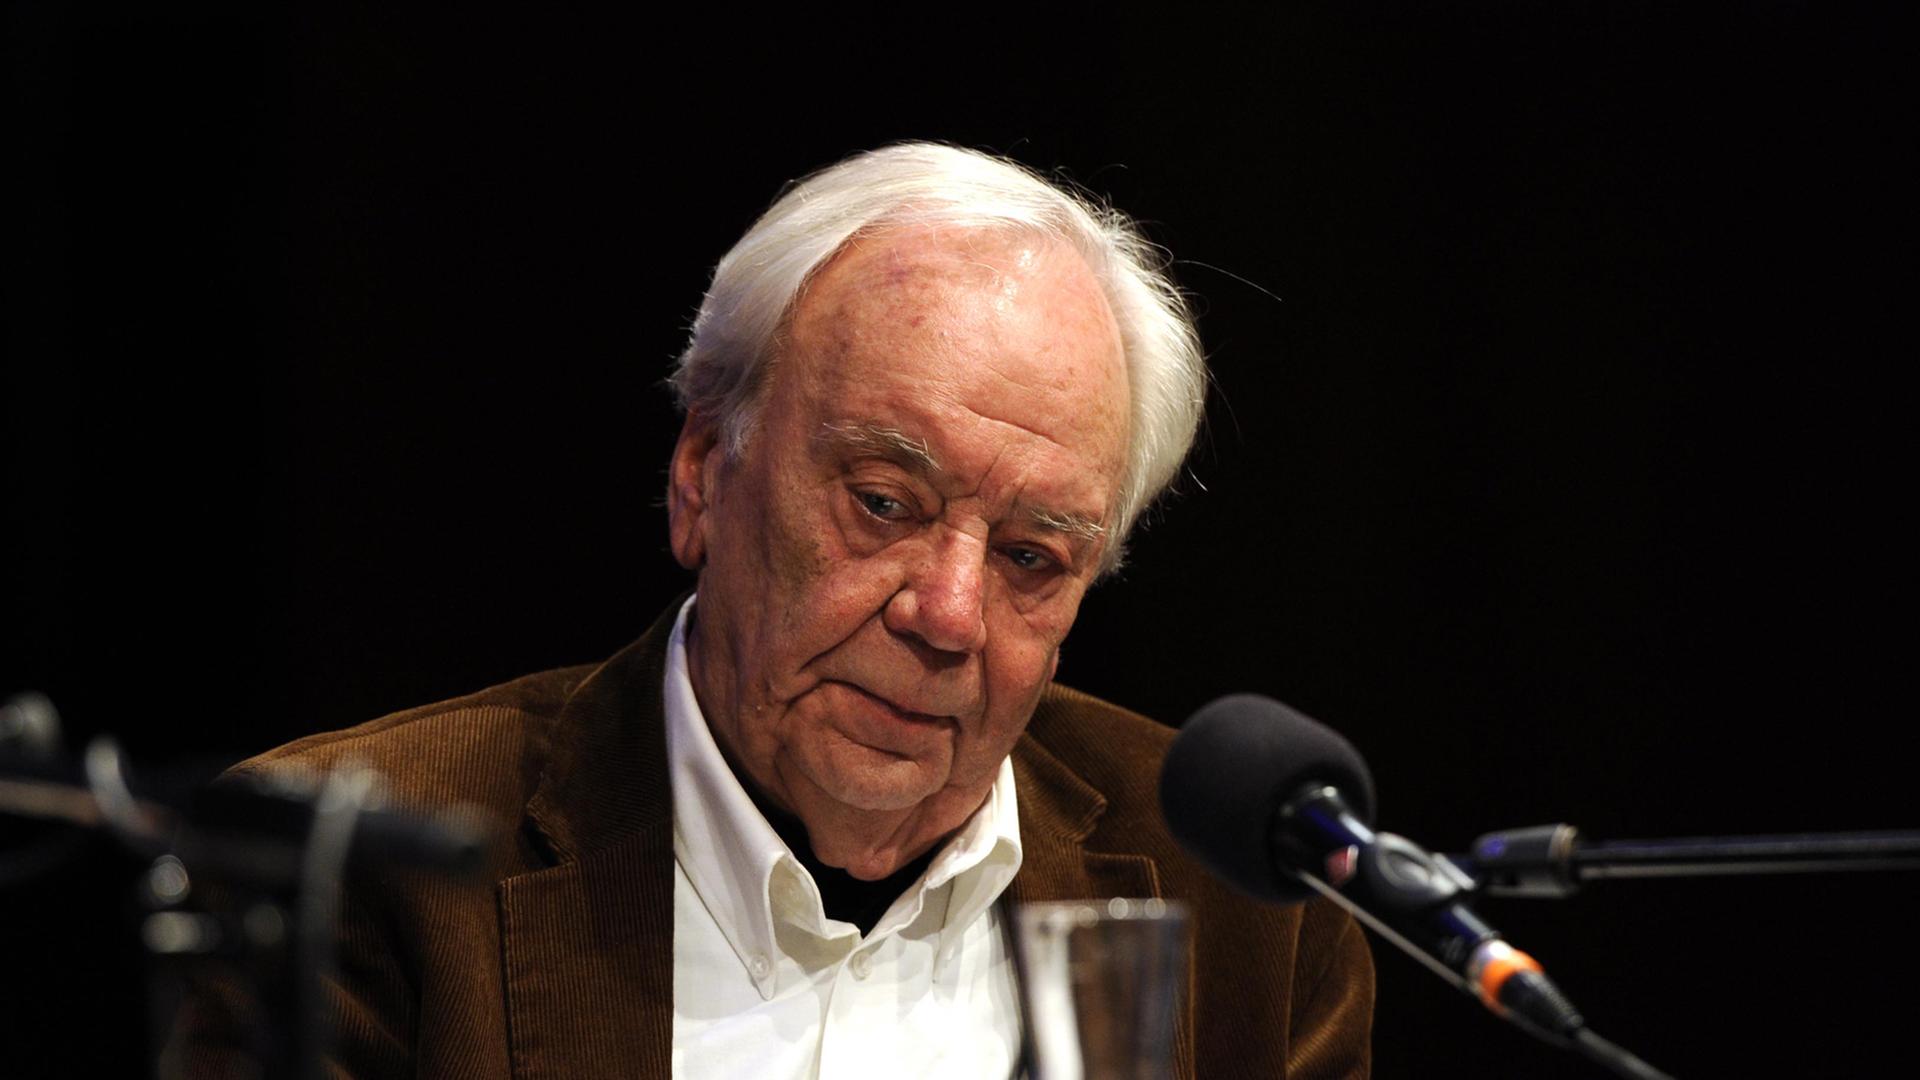 Schriftsteller Jürgen Becker liest am 18.03.2014 im Rahmen des internationalen Literaturfestival lit. Cologne.